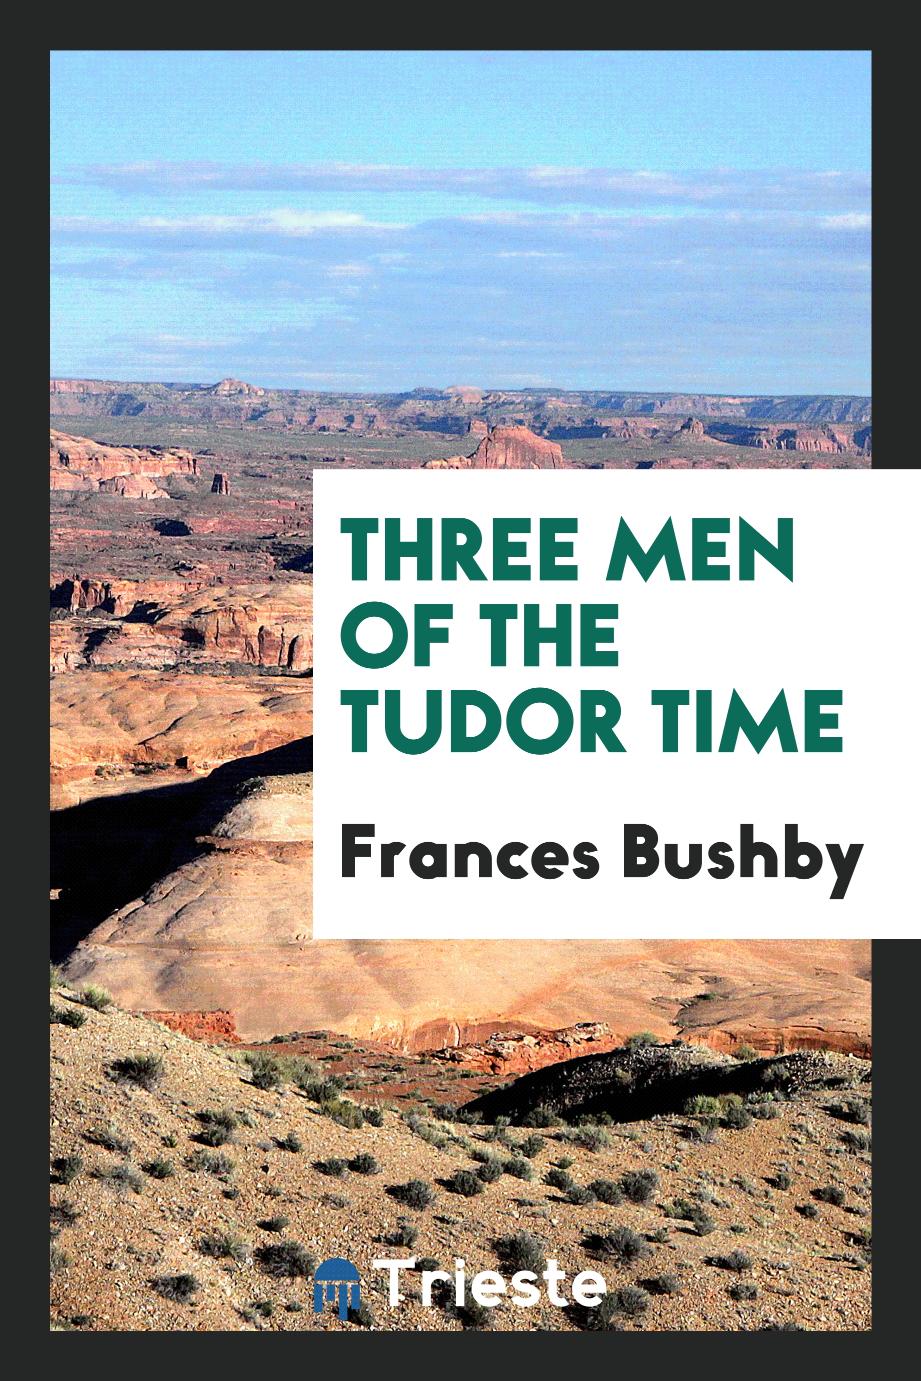 Three men of the Tudor time